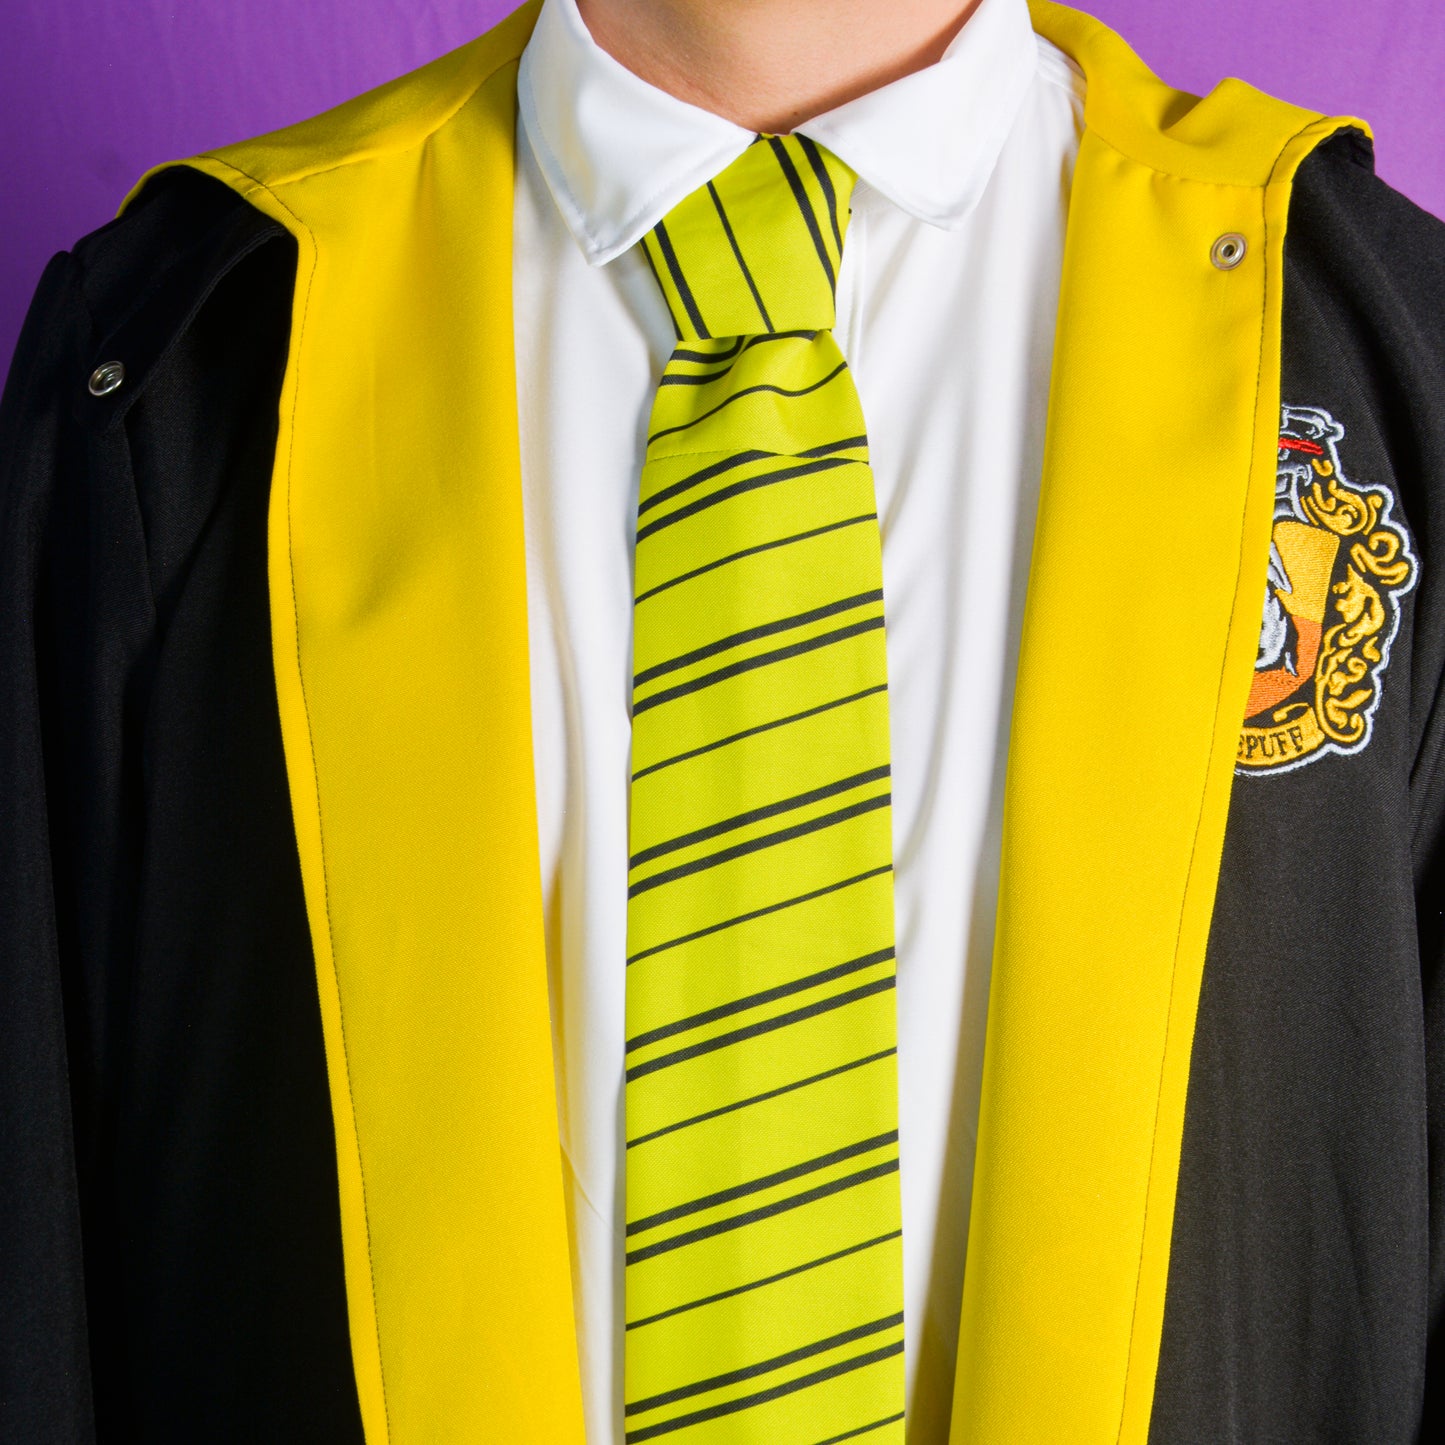 Uniforme completo Hufflepuff (Capa- camisa- pantalón-corbata - totebag)